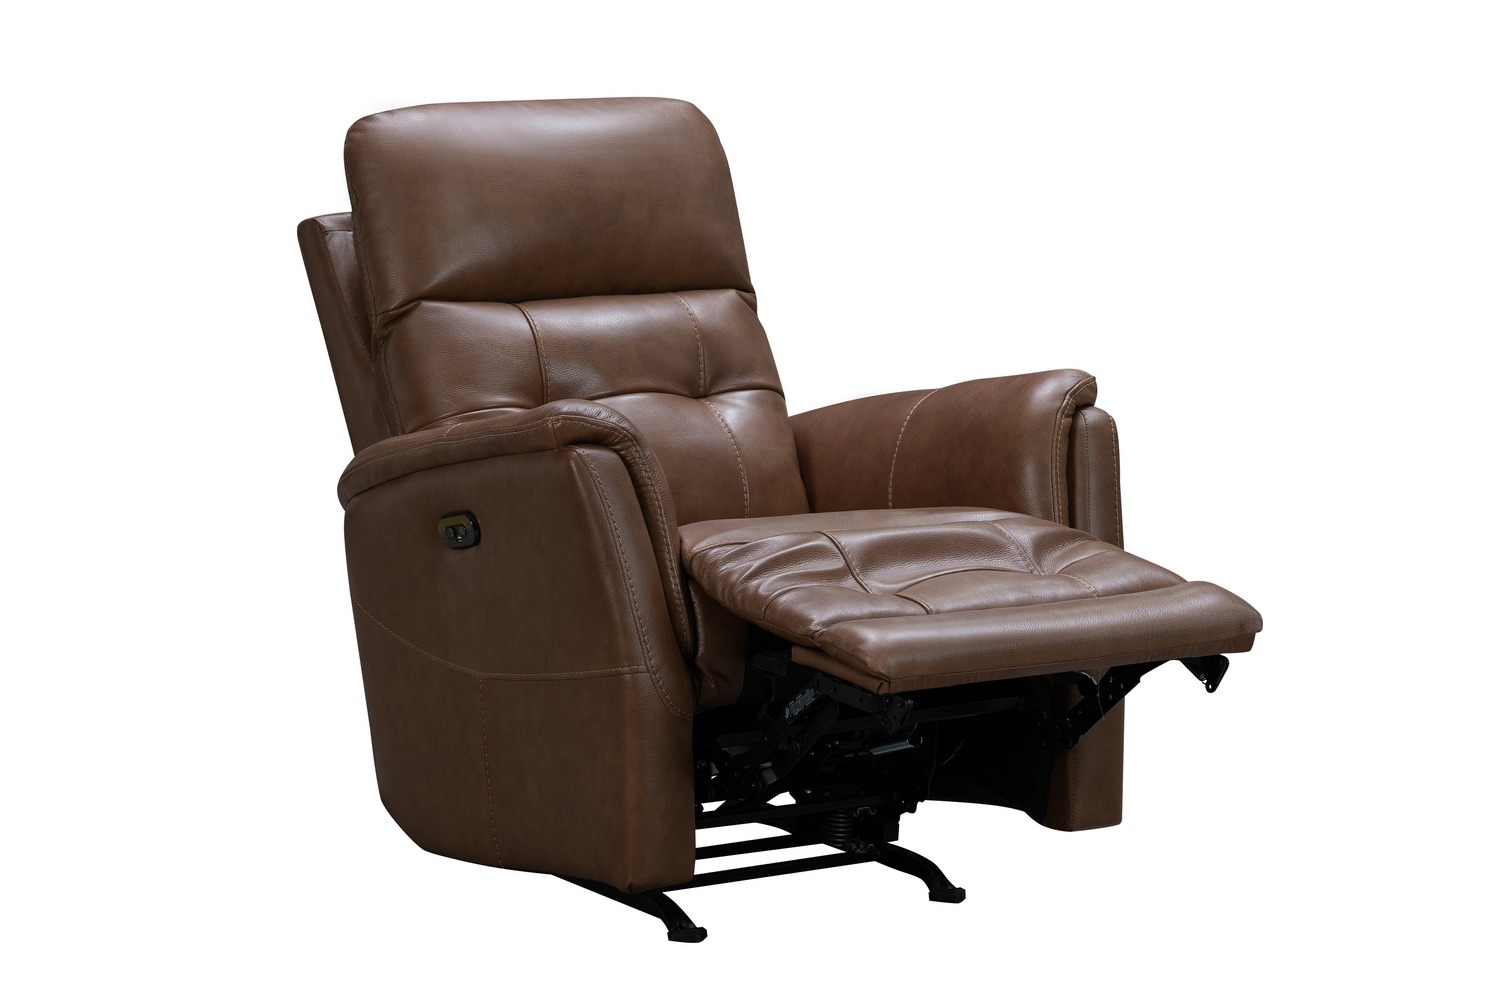 Barcalounger Horton Power Rocker Recliner Chair with Power Head Rest - Spence Caramel/Leather match